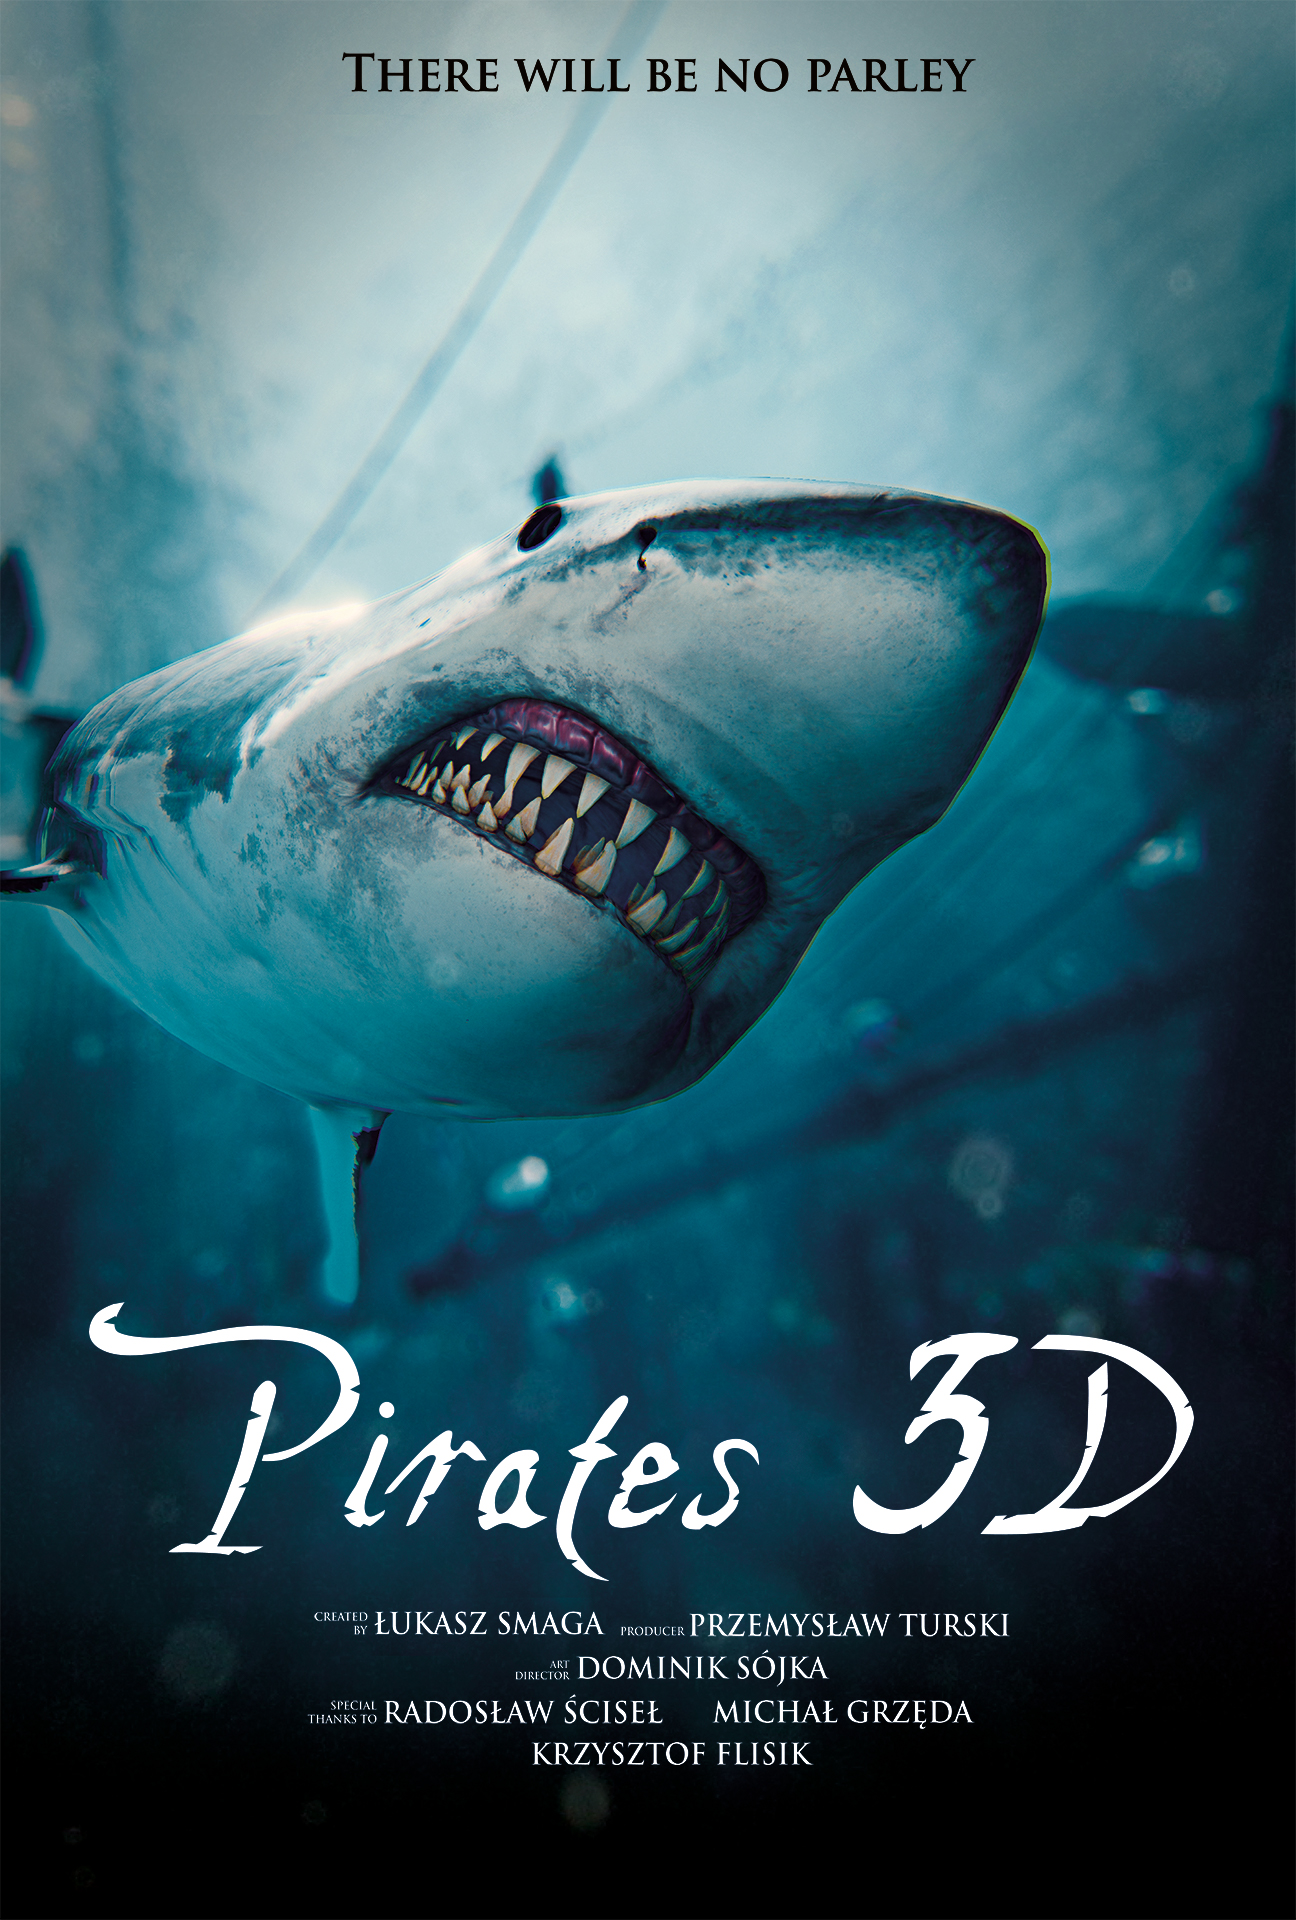 Pirates 3D - poster - Split Light Studio